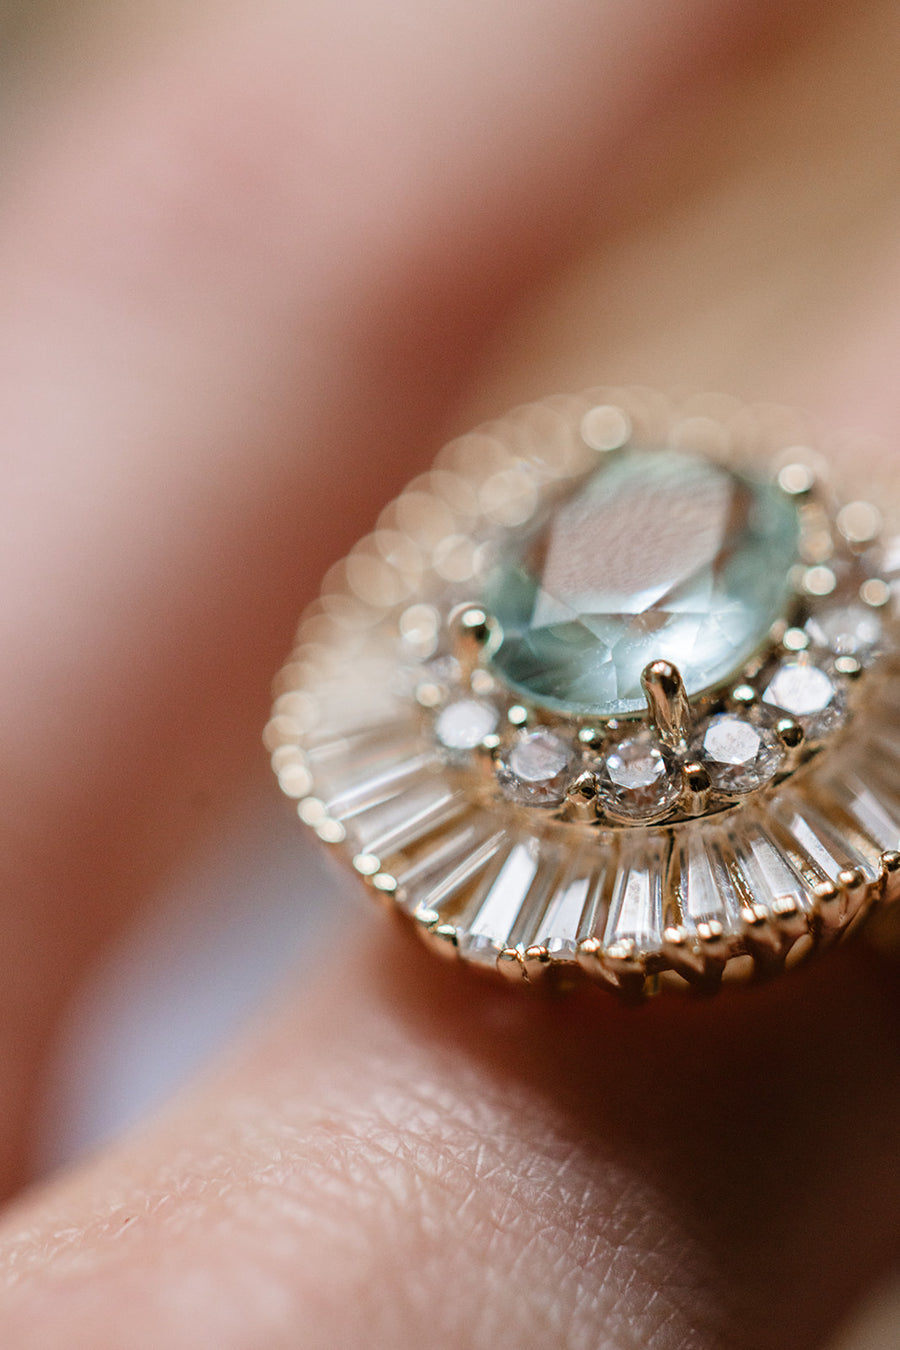 Paris Blue Ballerina Embellished Ring